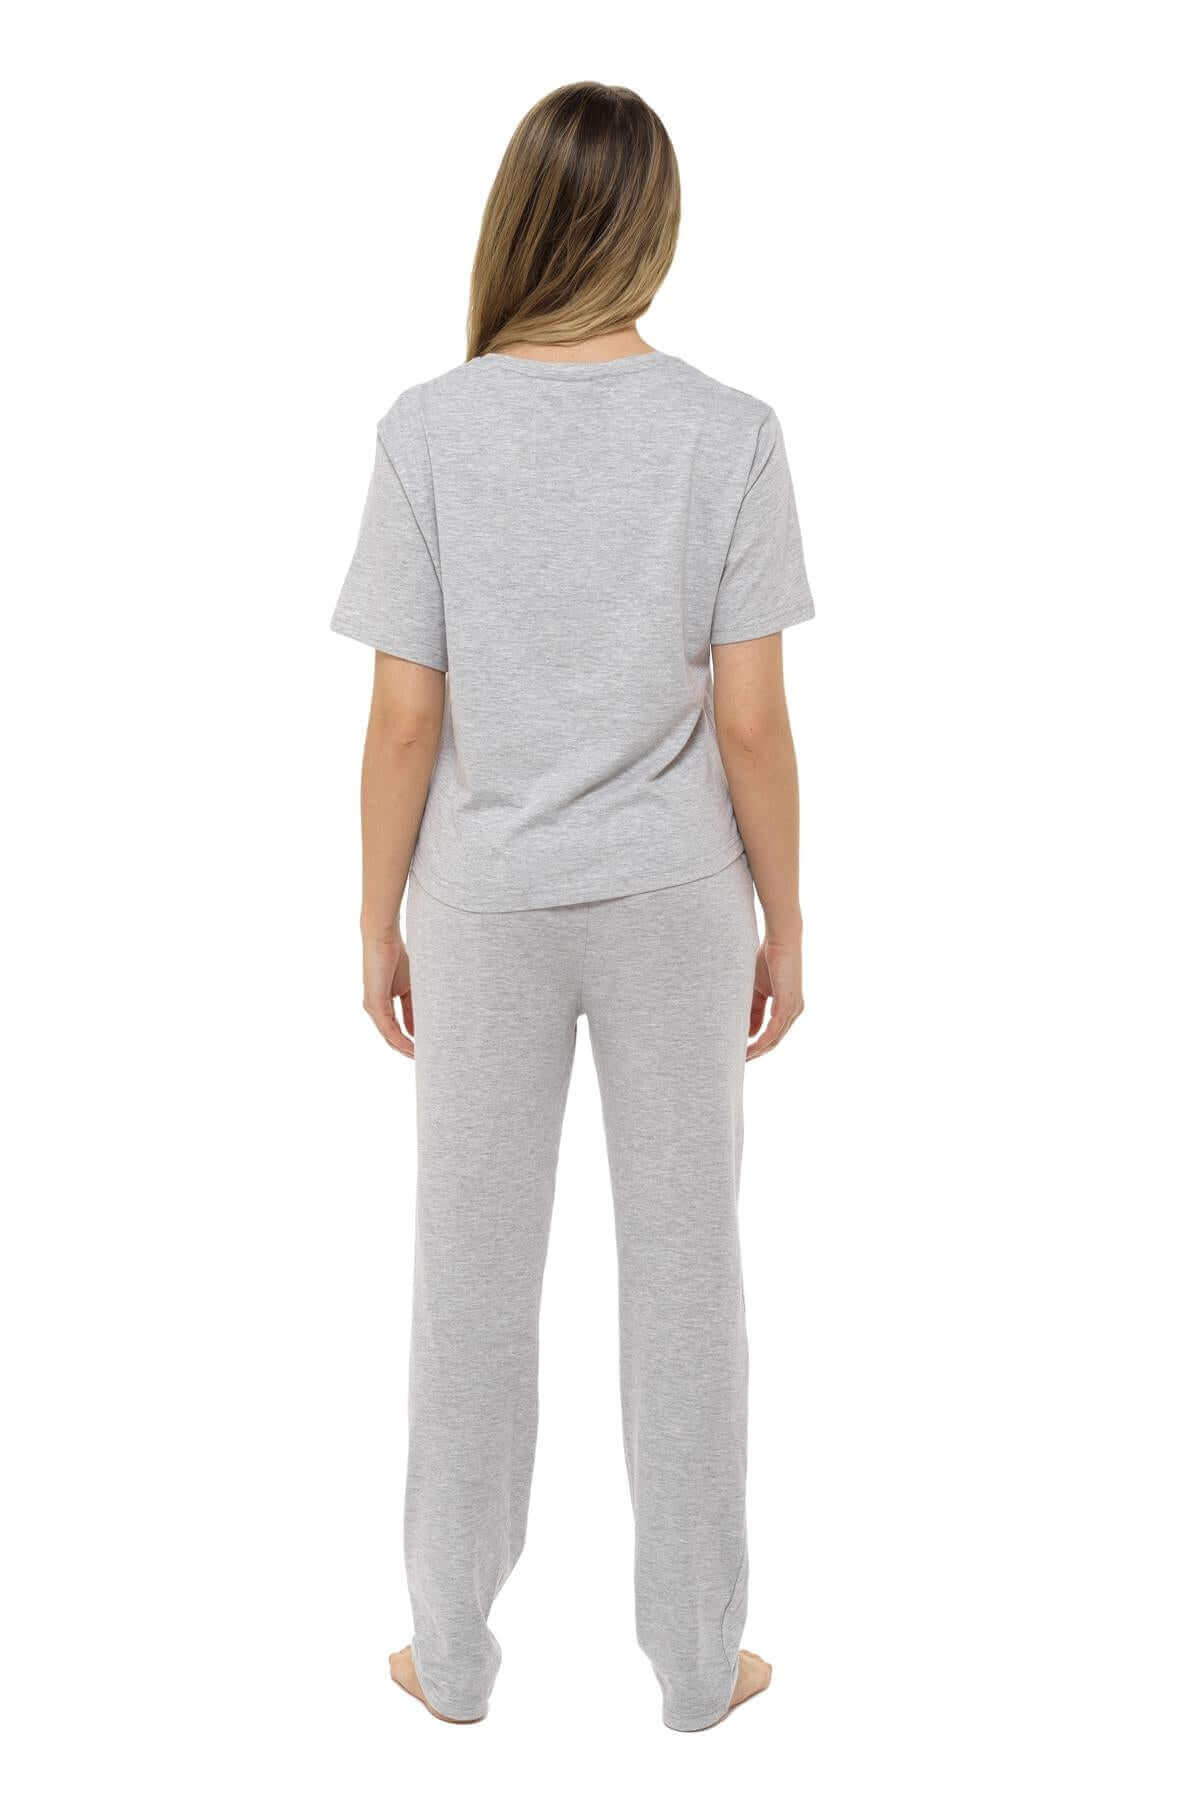 Women's Jersey Marl Loungewear Pyjama Sets Ladies Nightwear. Buy now for £15.00. A Pyjamas by Daisy Dreamer. 12-14, 16-18, 20-22, 8-10, blue, bottom, casual, comfortable, cotton, daisy dreamer, grey, gym, half, home, hotel, jersey, loungewear, marl blue,